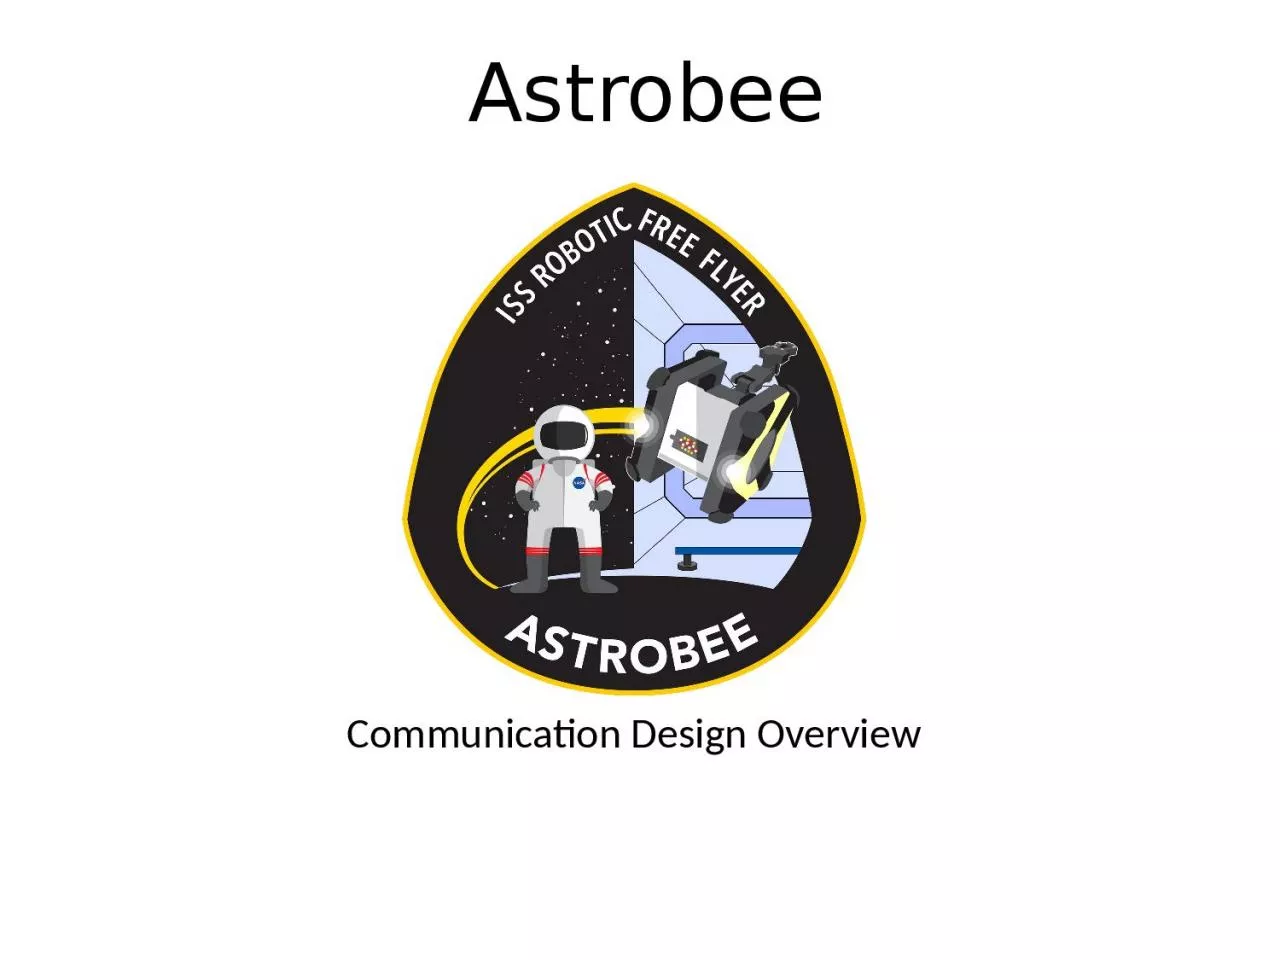 Astrobee Communication Design Overview